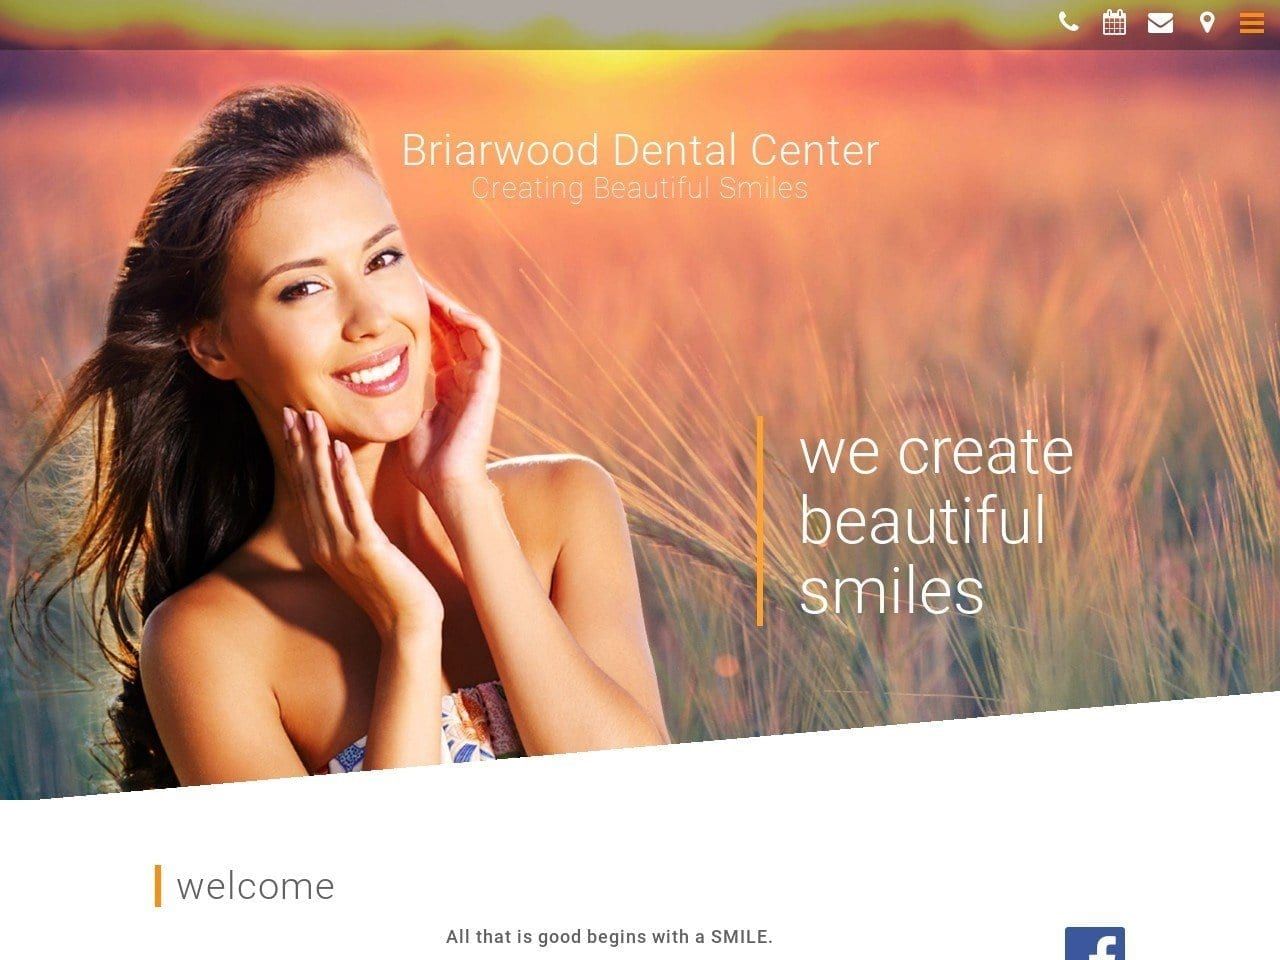 Briarwood Dental Center Website Screenshot from briarwooddentalcenter.com